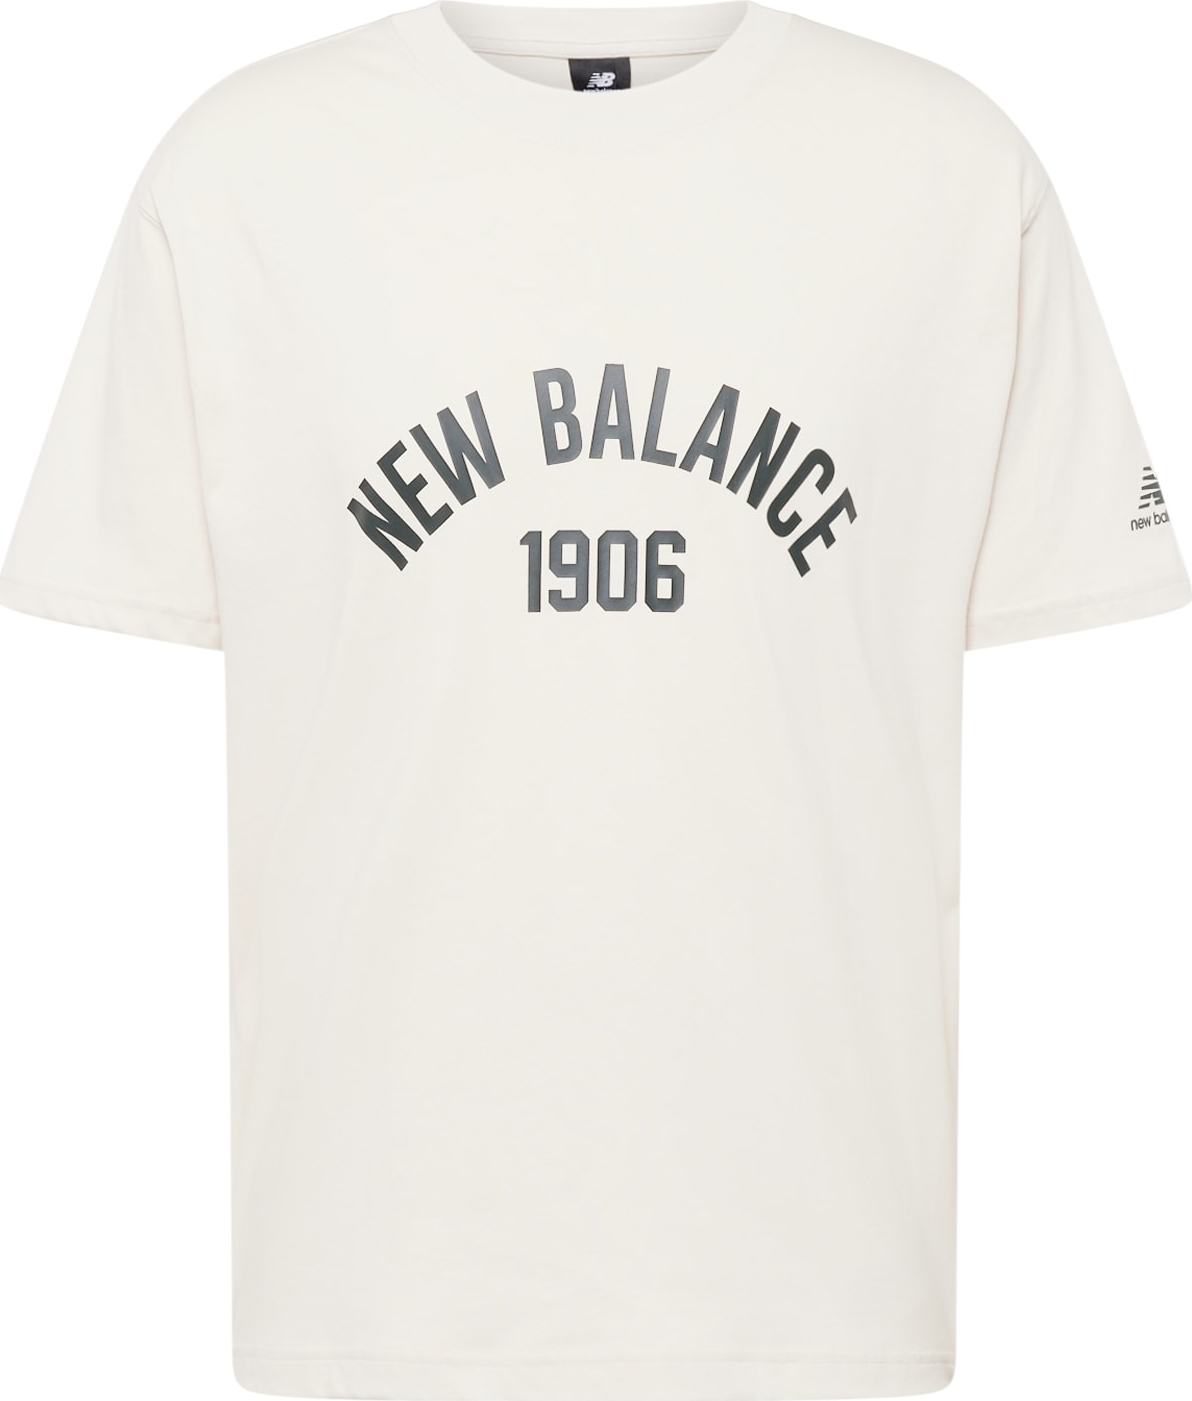 Tričko New Balance černá / bílá